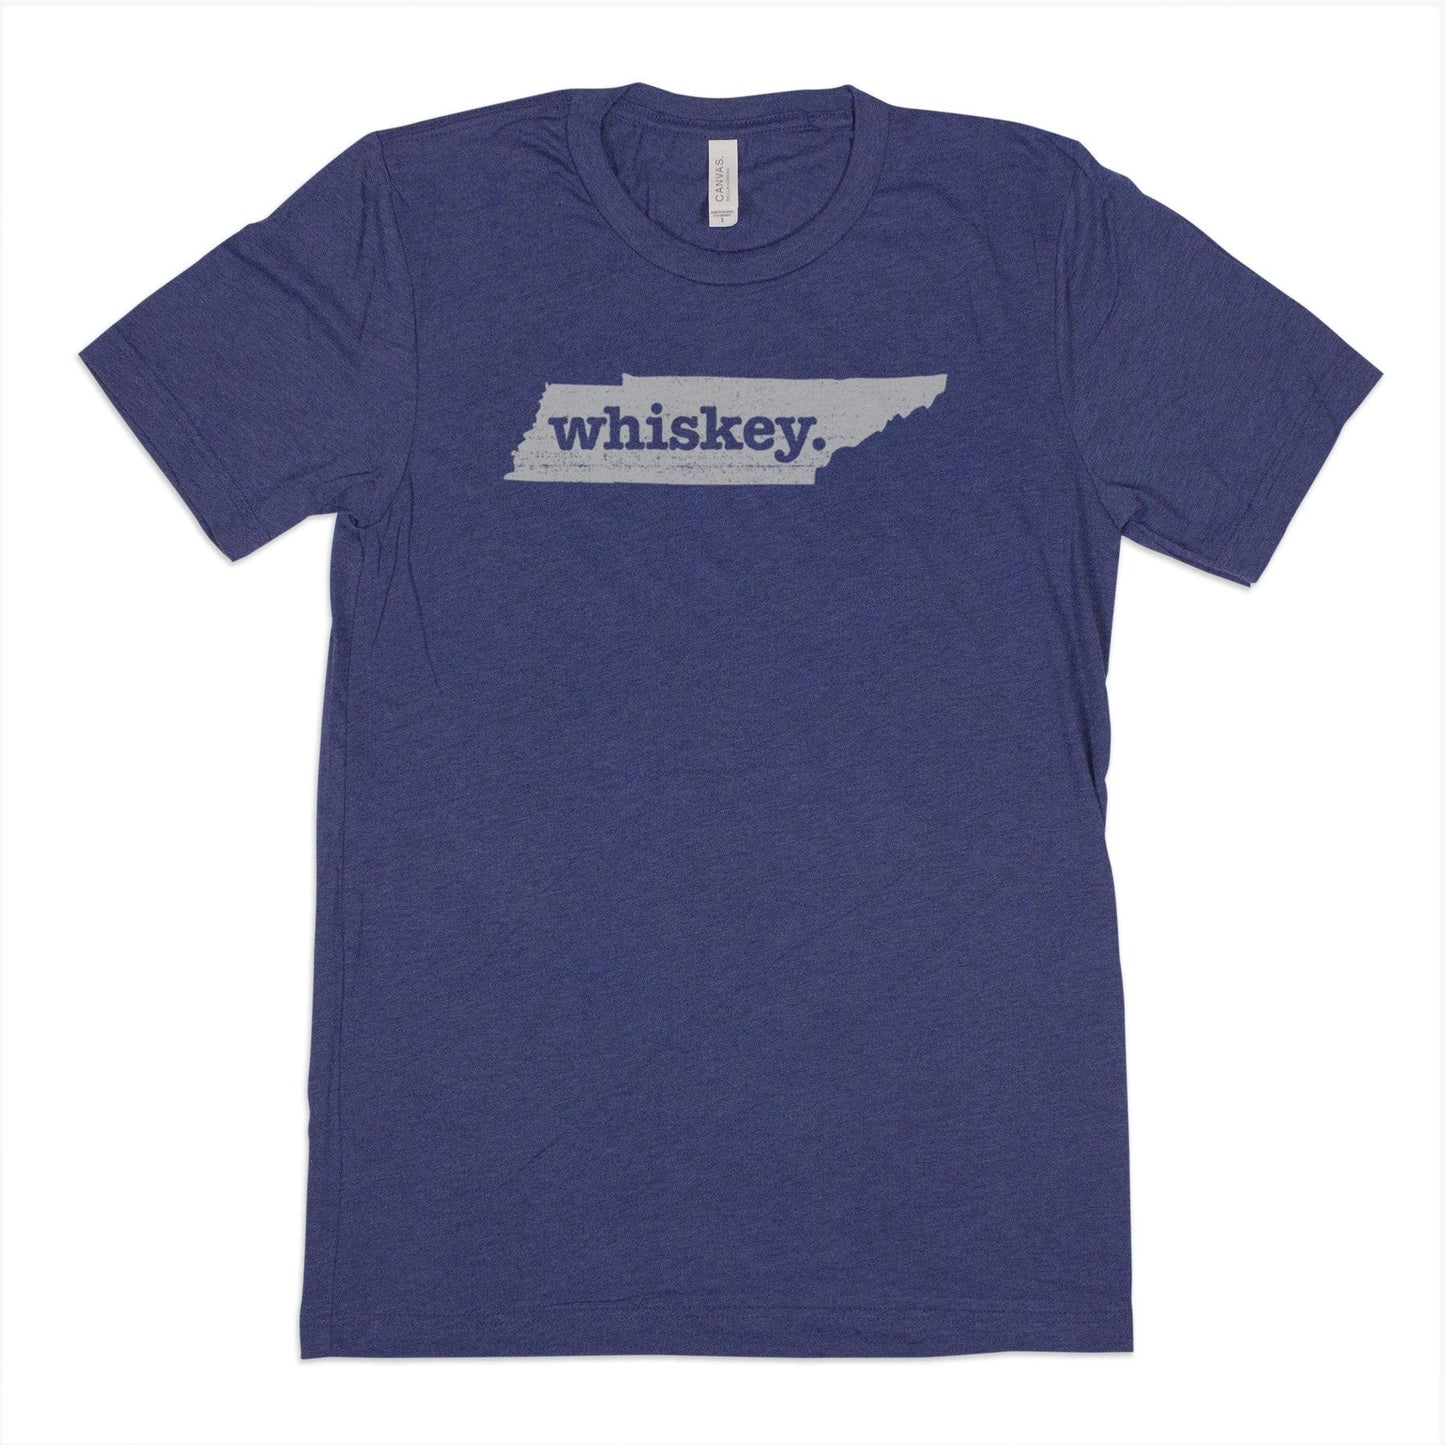 wine. Men's Unisex T-Shirt - South Dakota